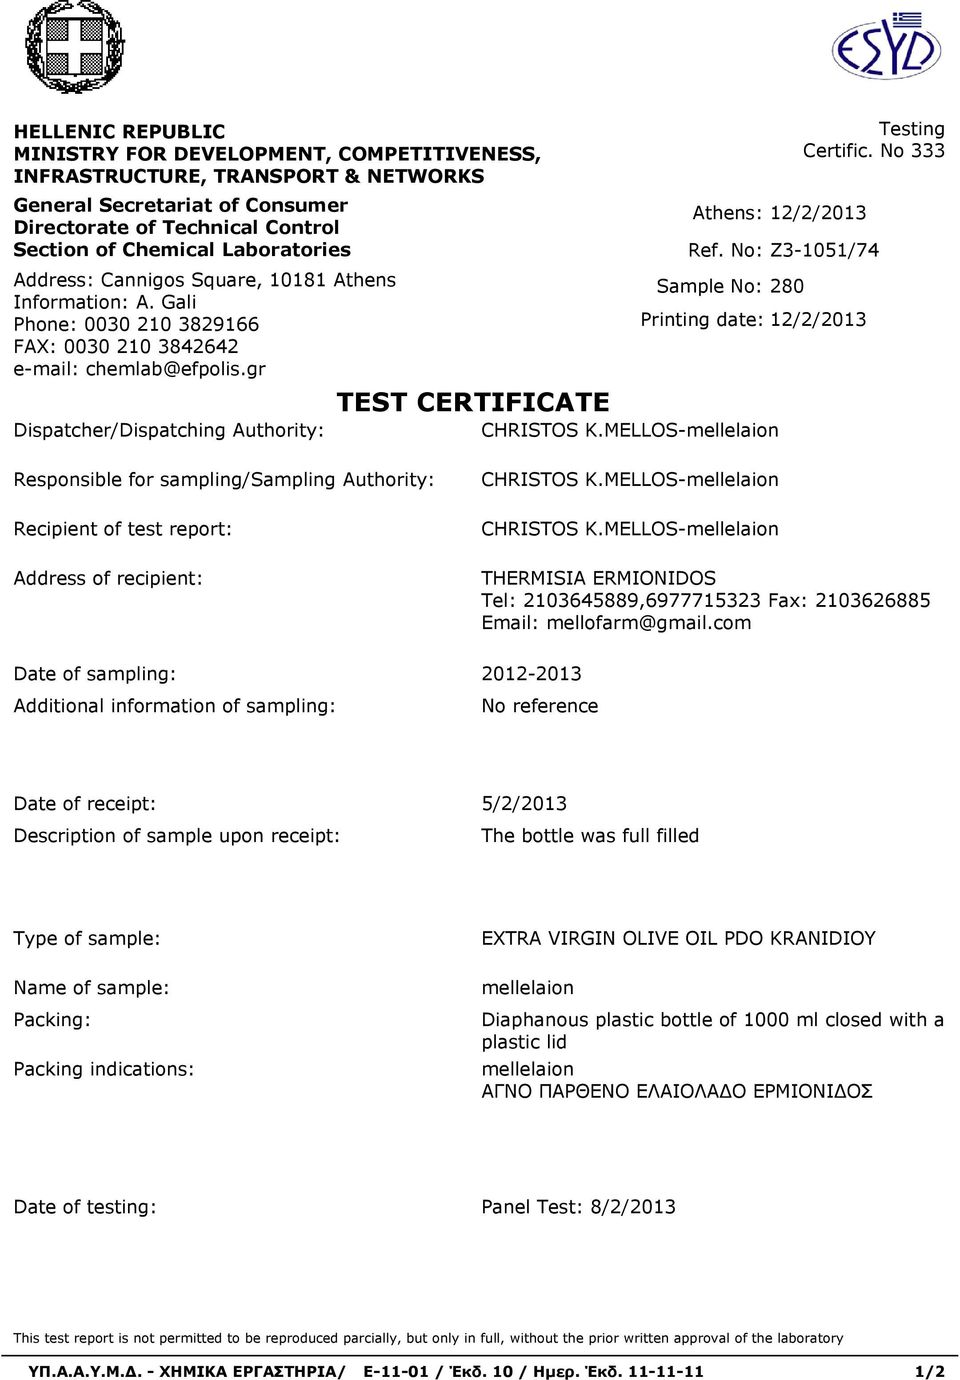 MELLOS- Athens: 12/2/2013 Sample No: 280 Testing Certific. No 333 Ref.